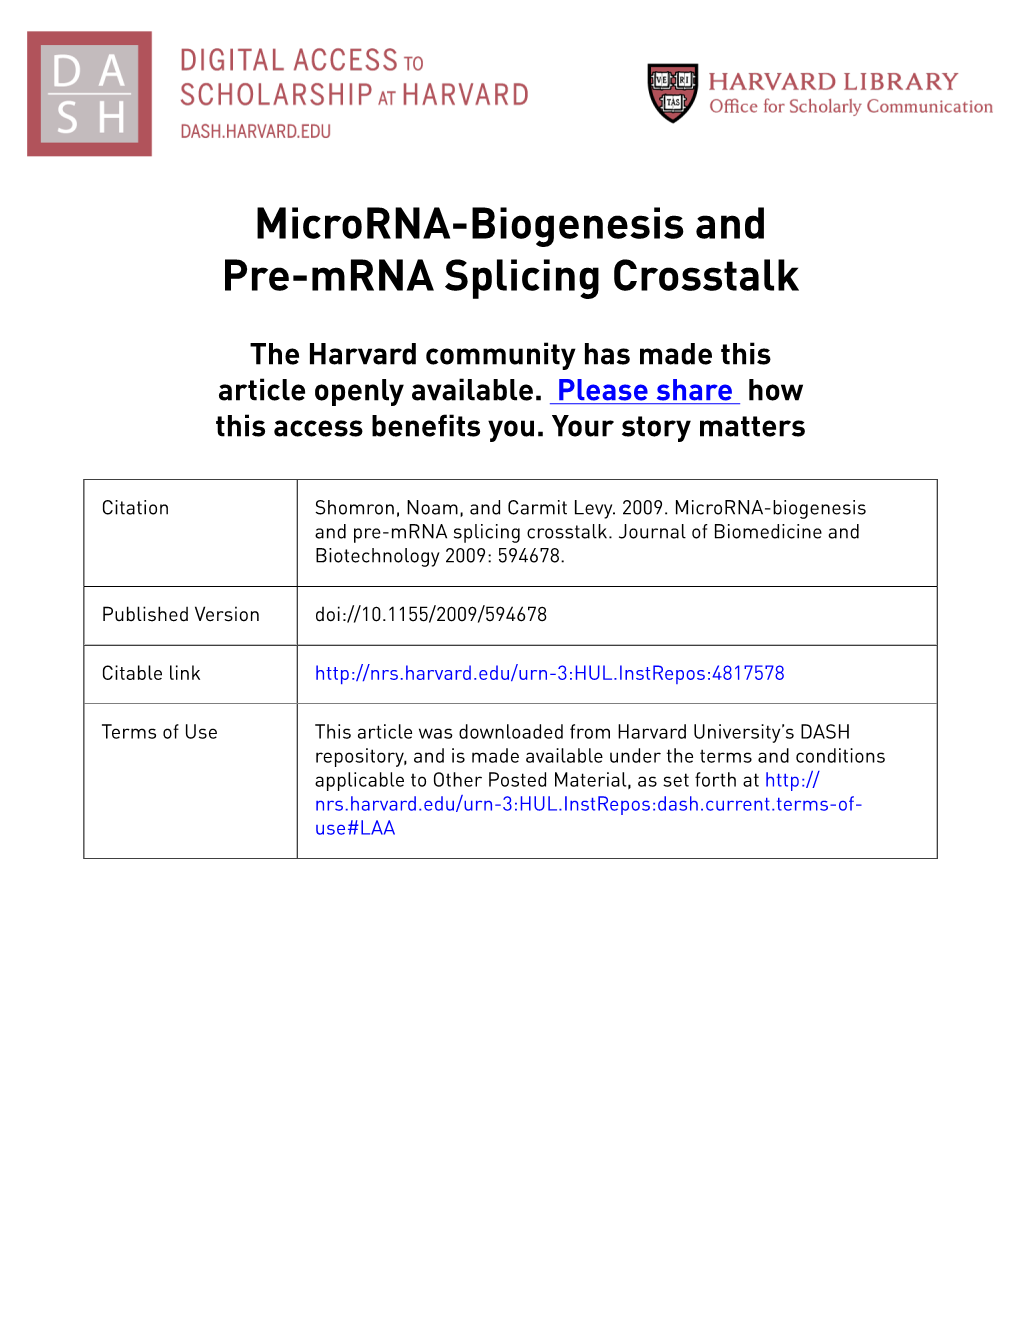 Microrna-Biogenesis and Pre-Mrna Splicing Crosstalk